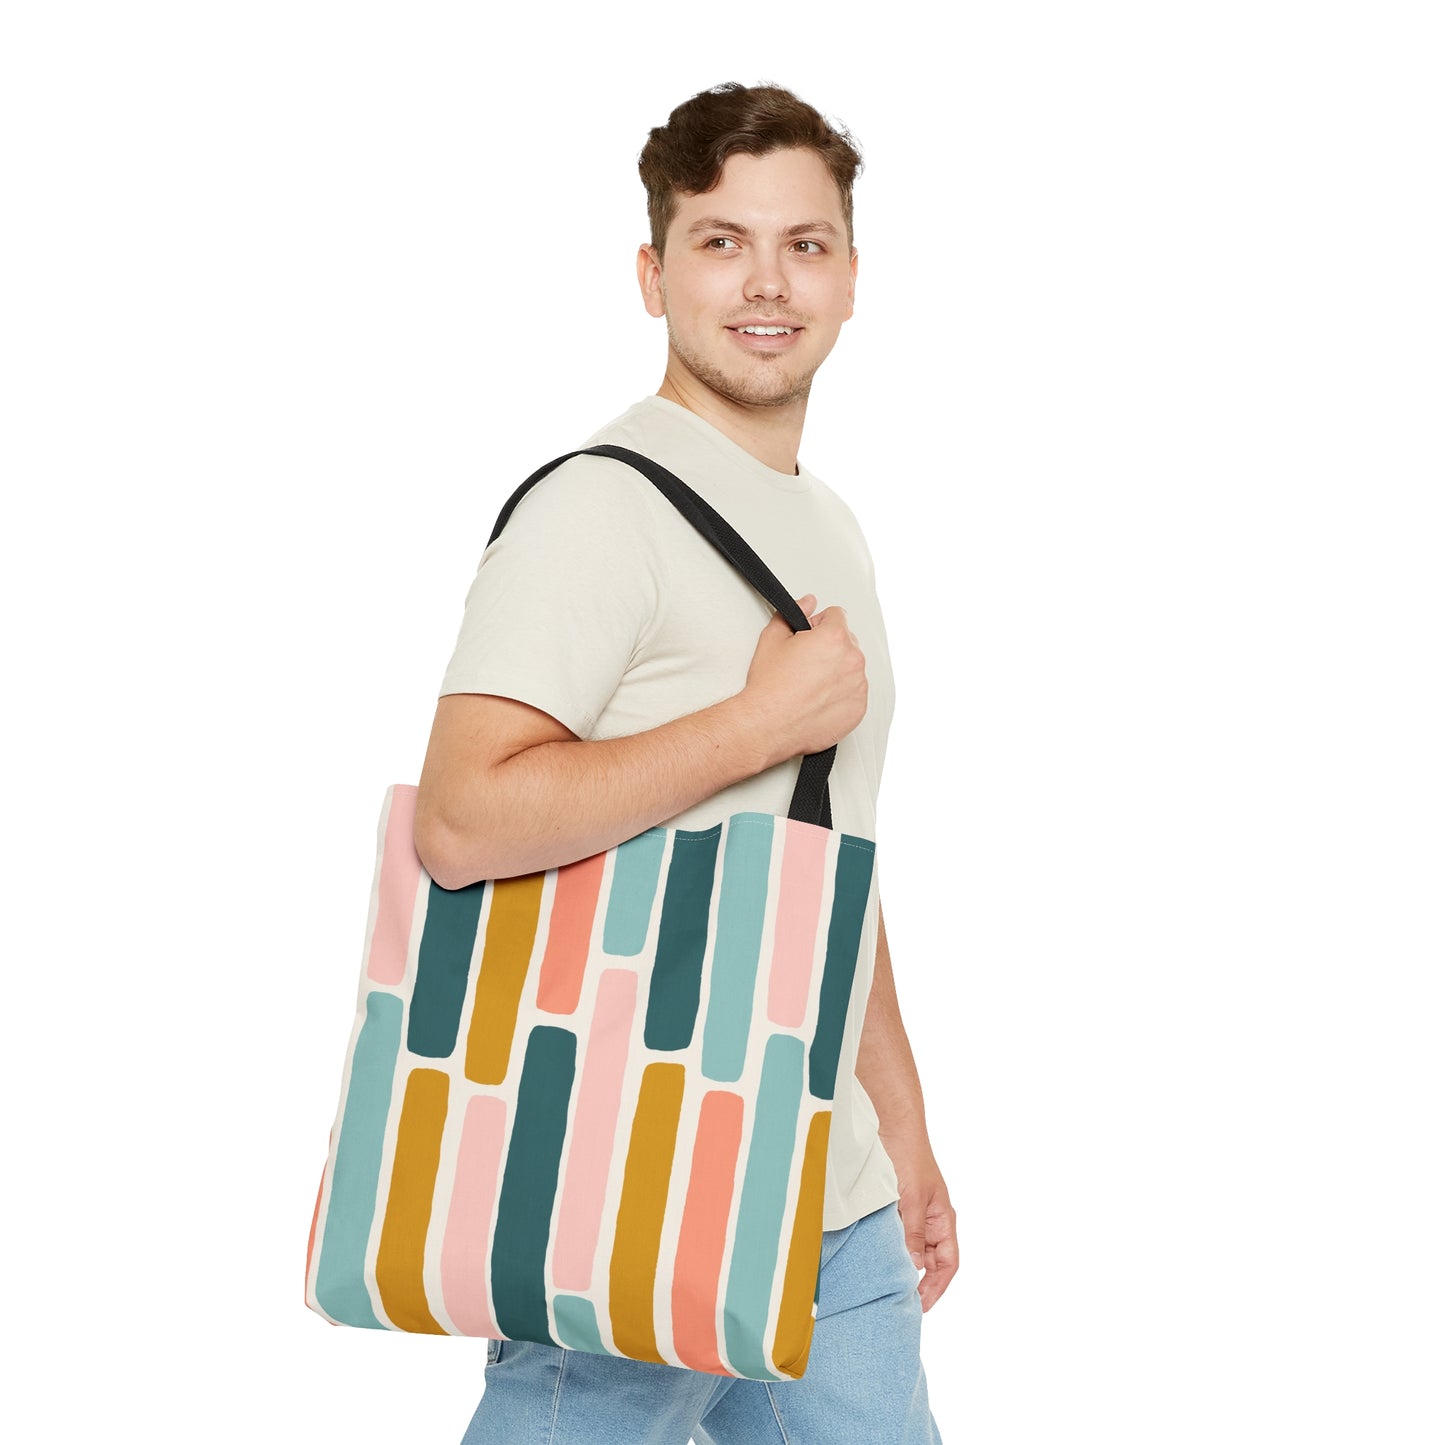 Tote Bag, Watercolor Stripes